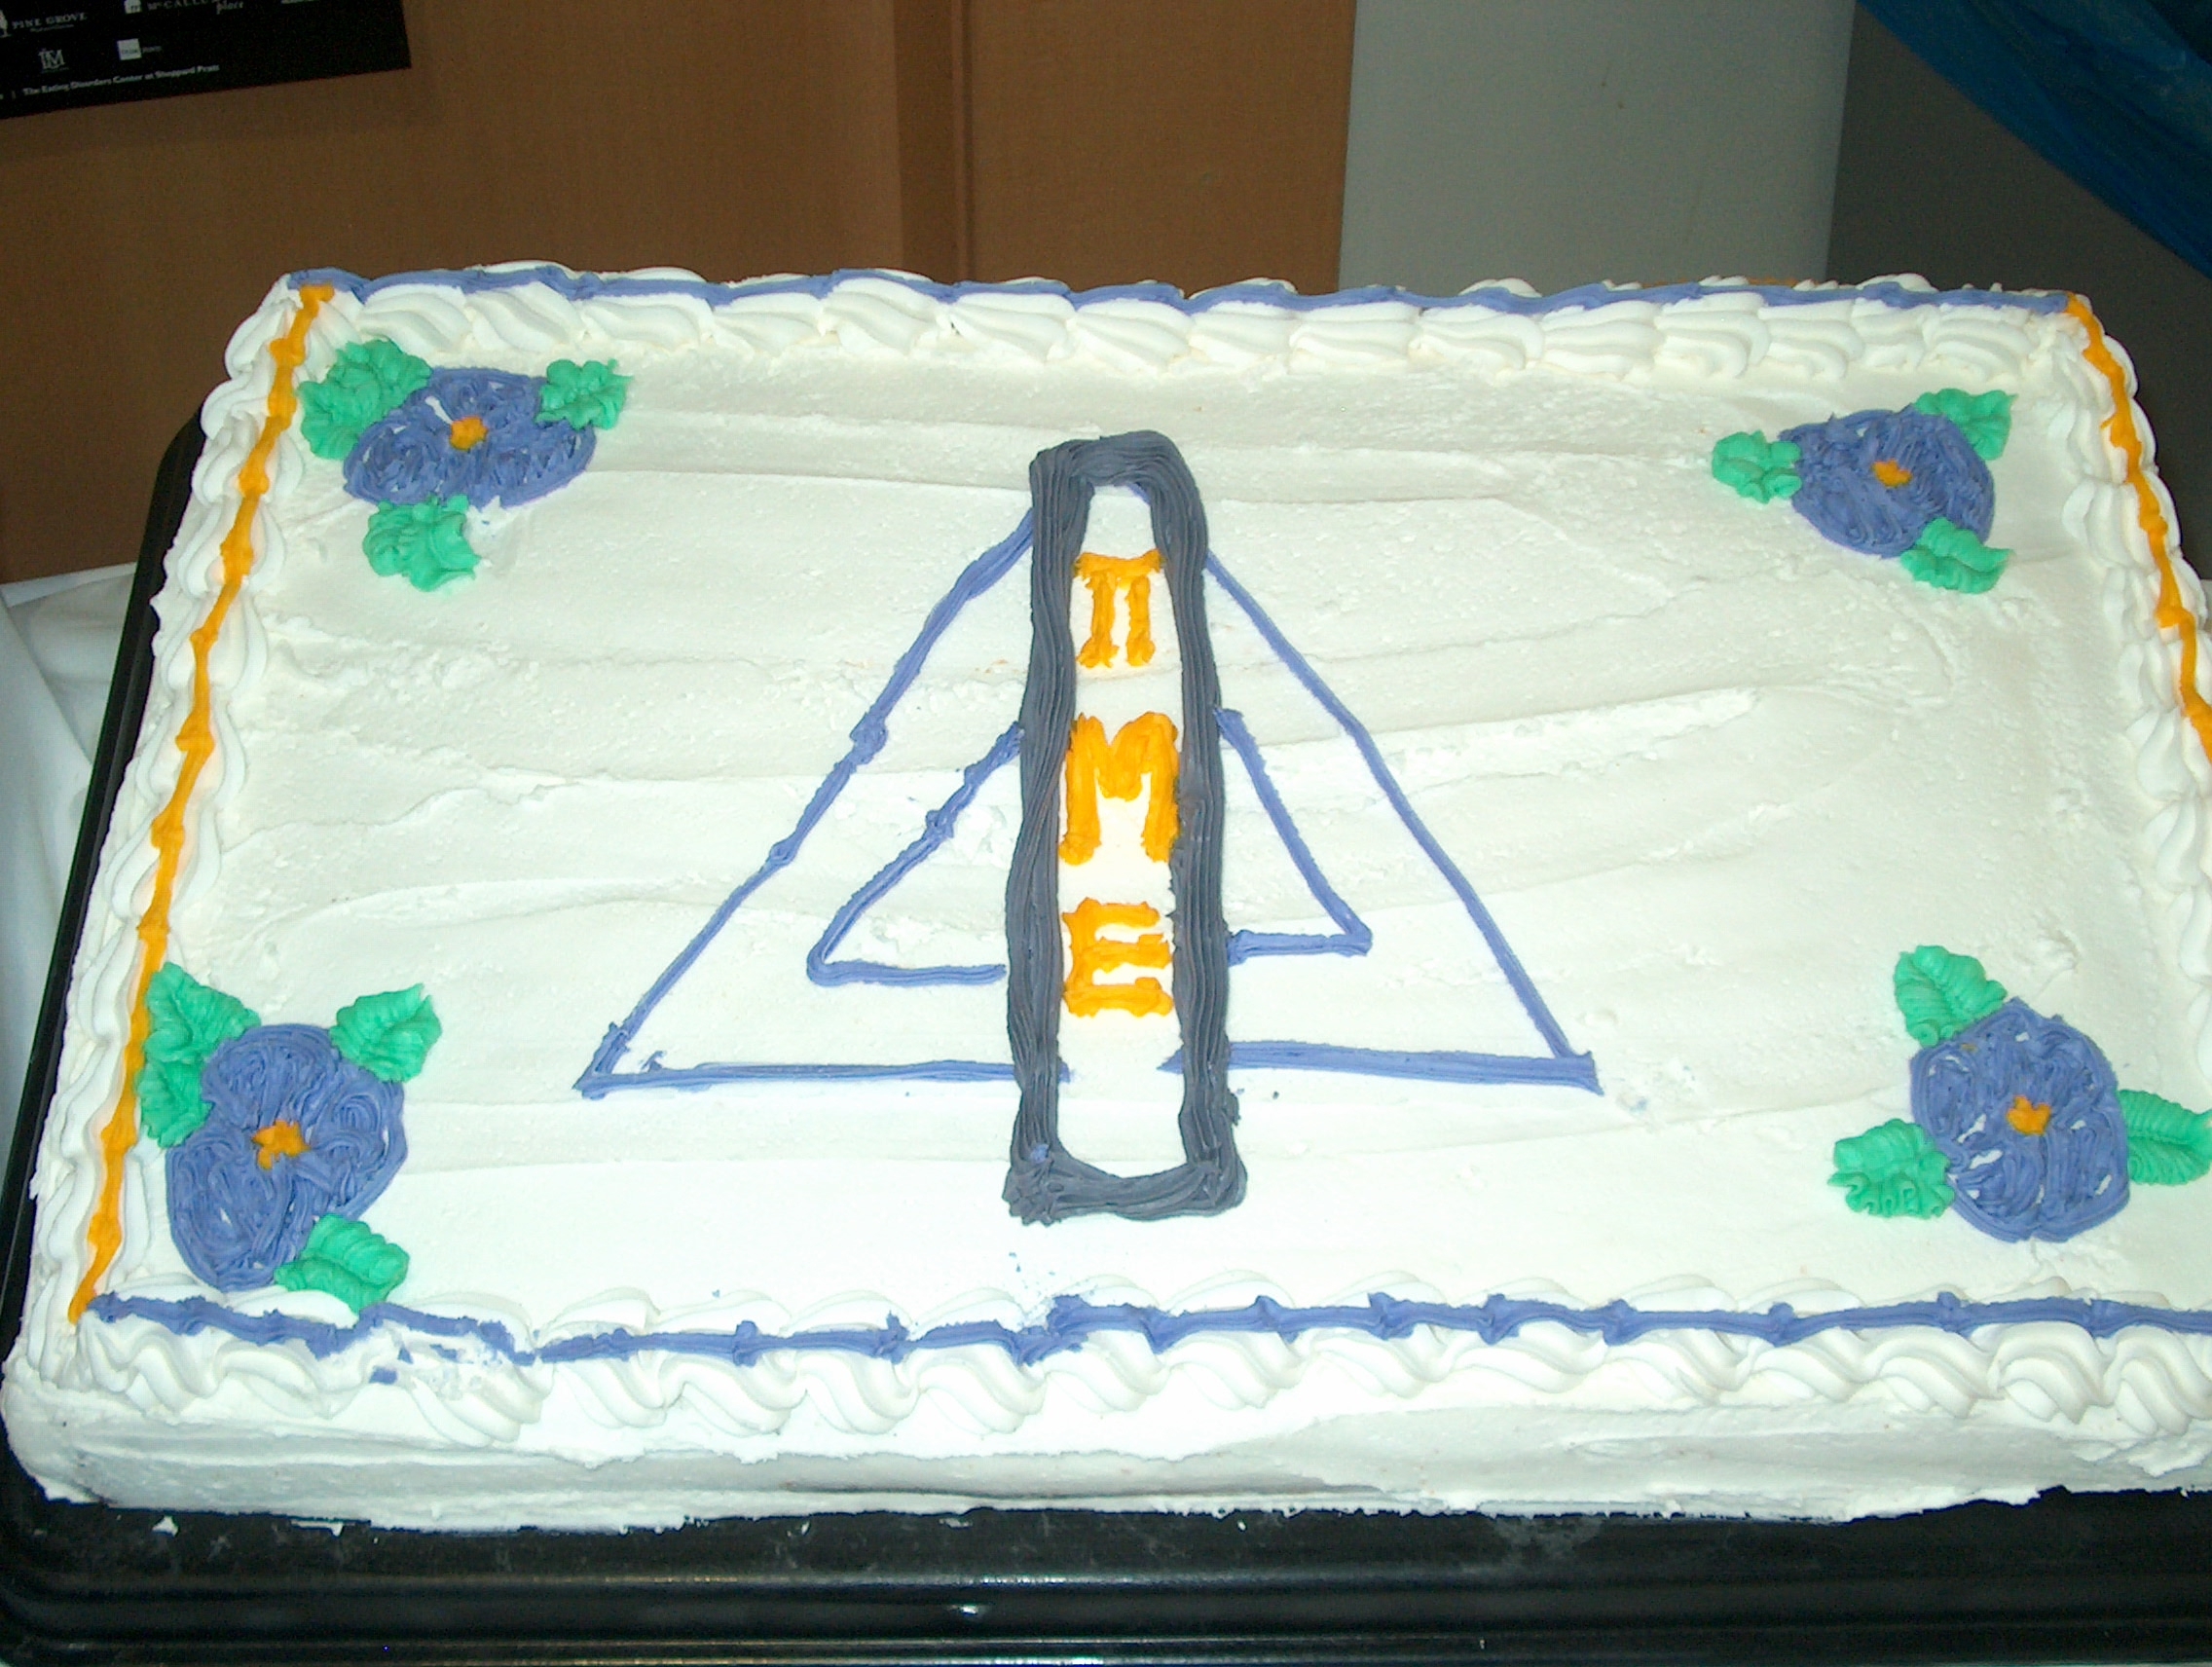 The Pi Mu Epsilon Cake